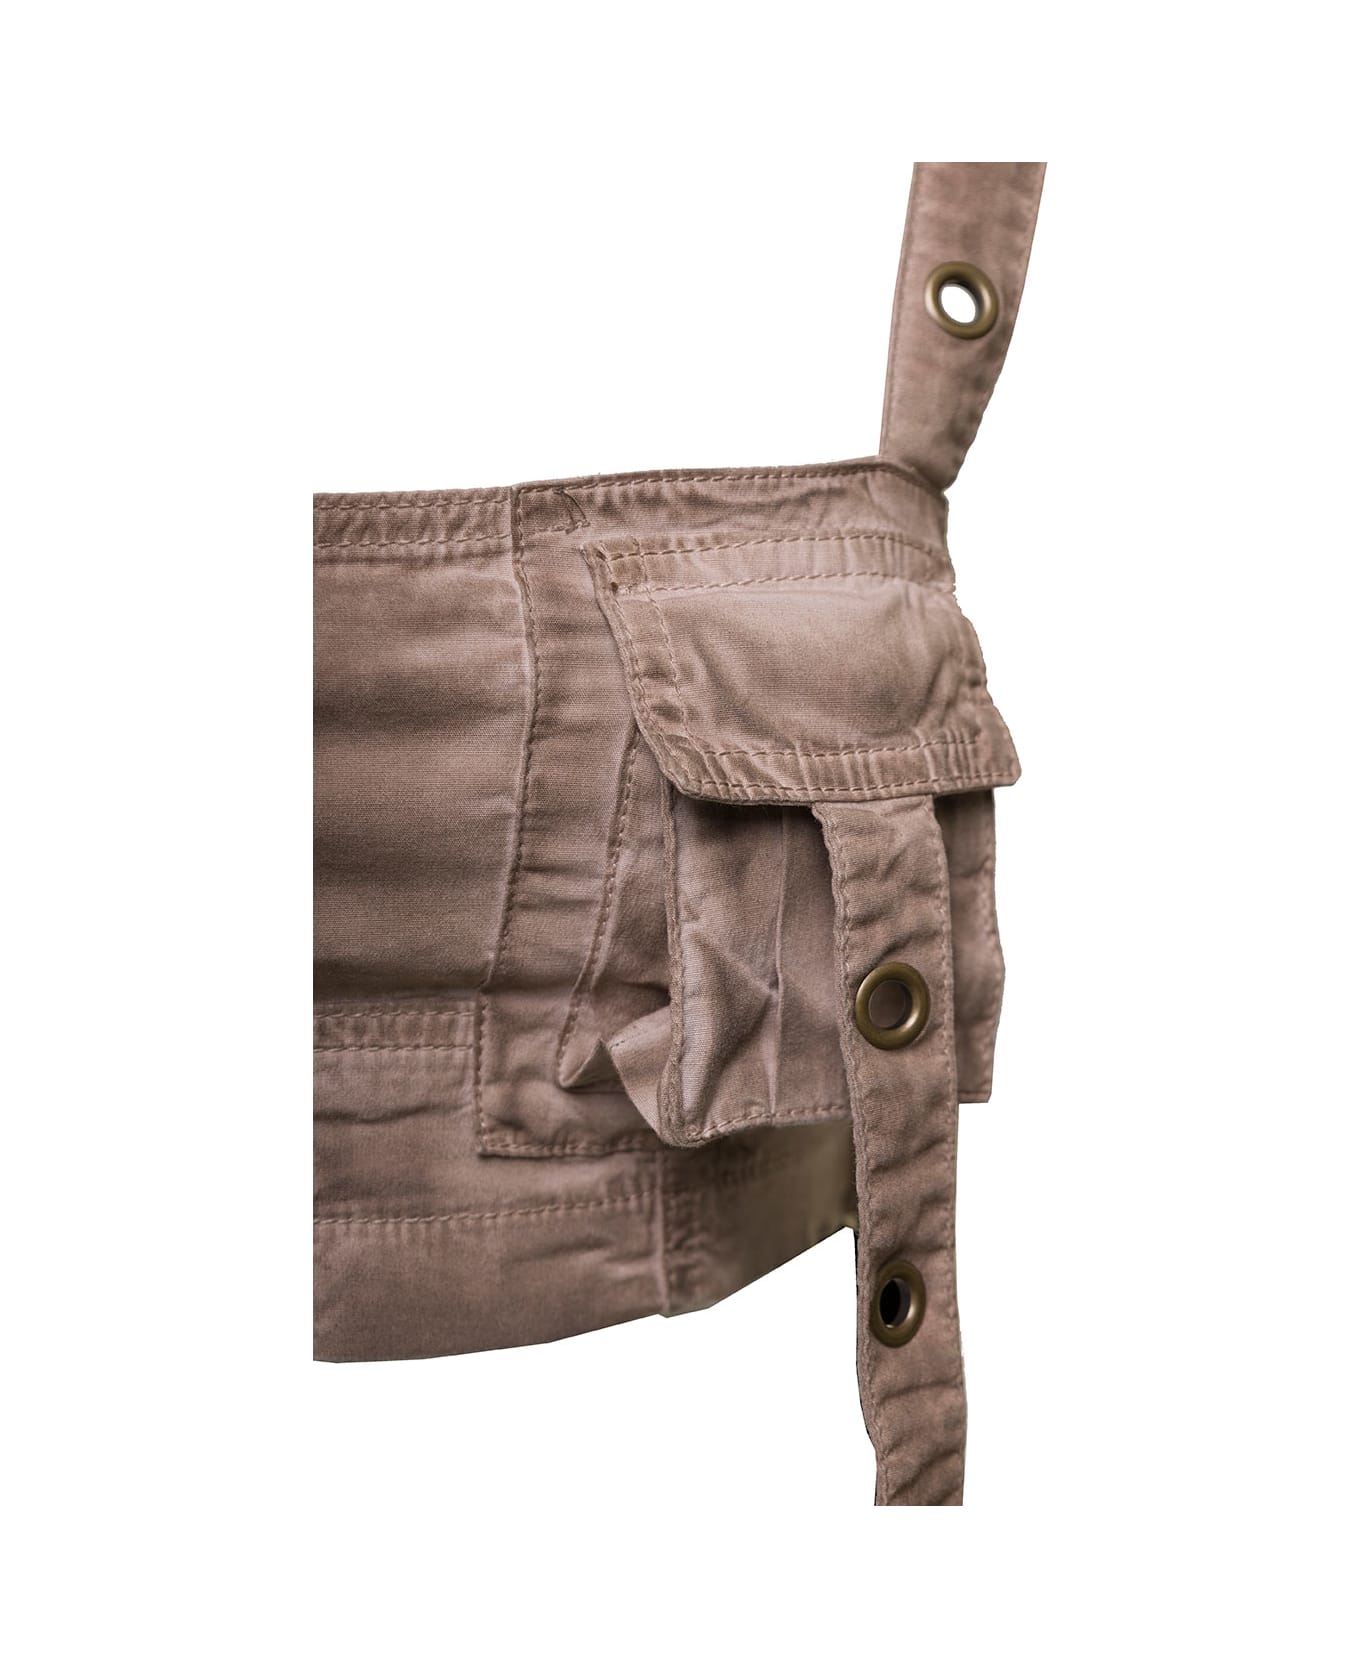 Blumarine Beige Cropped Cargo Top With Pockets In Cotton Stretch Woman - Beige